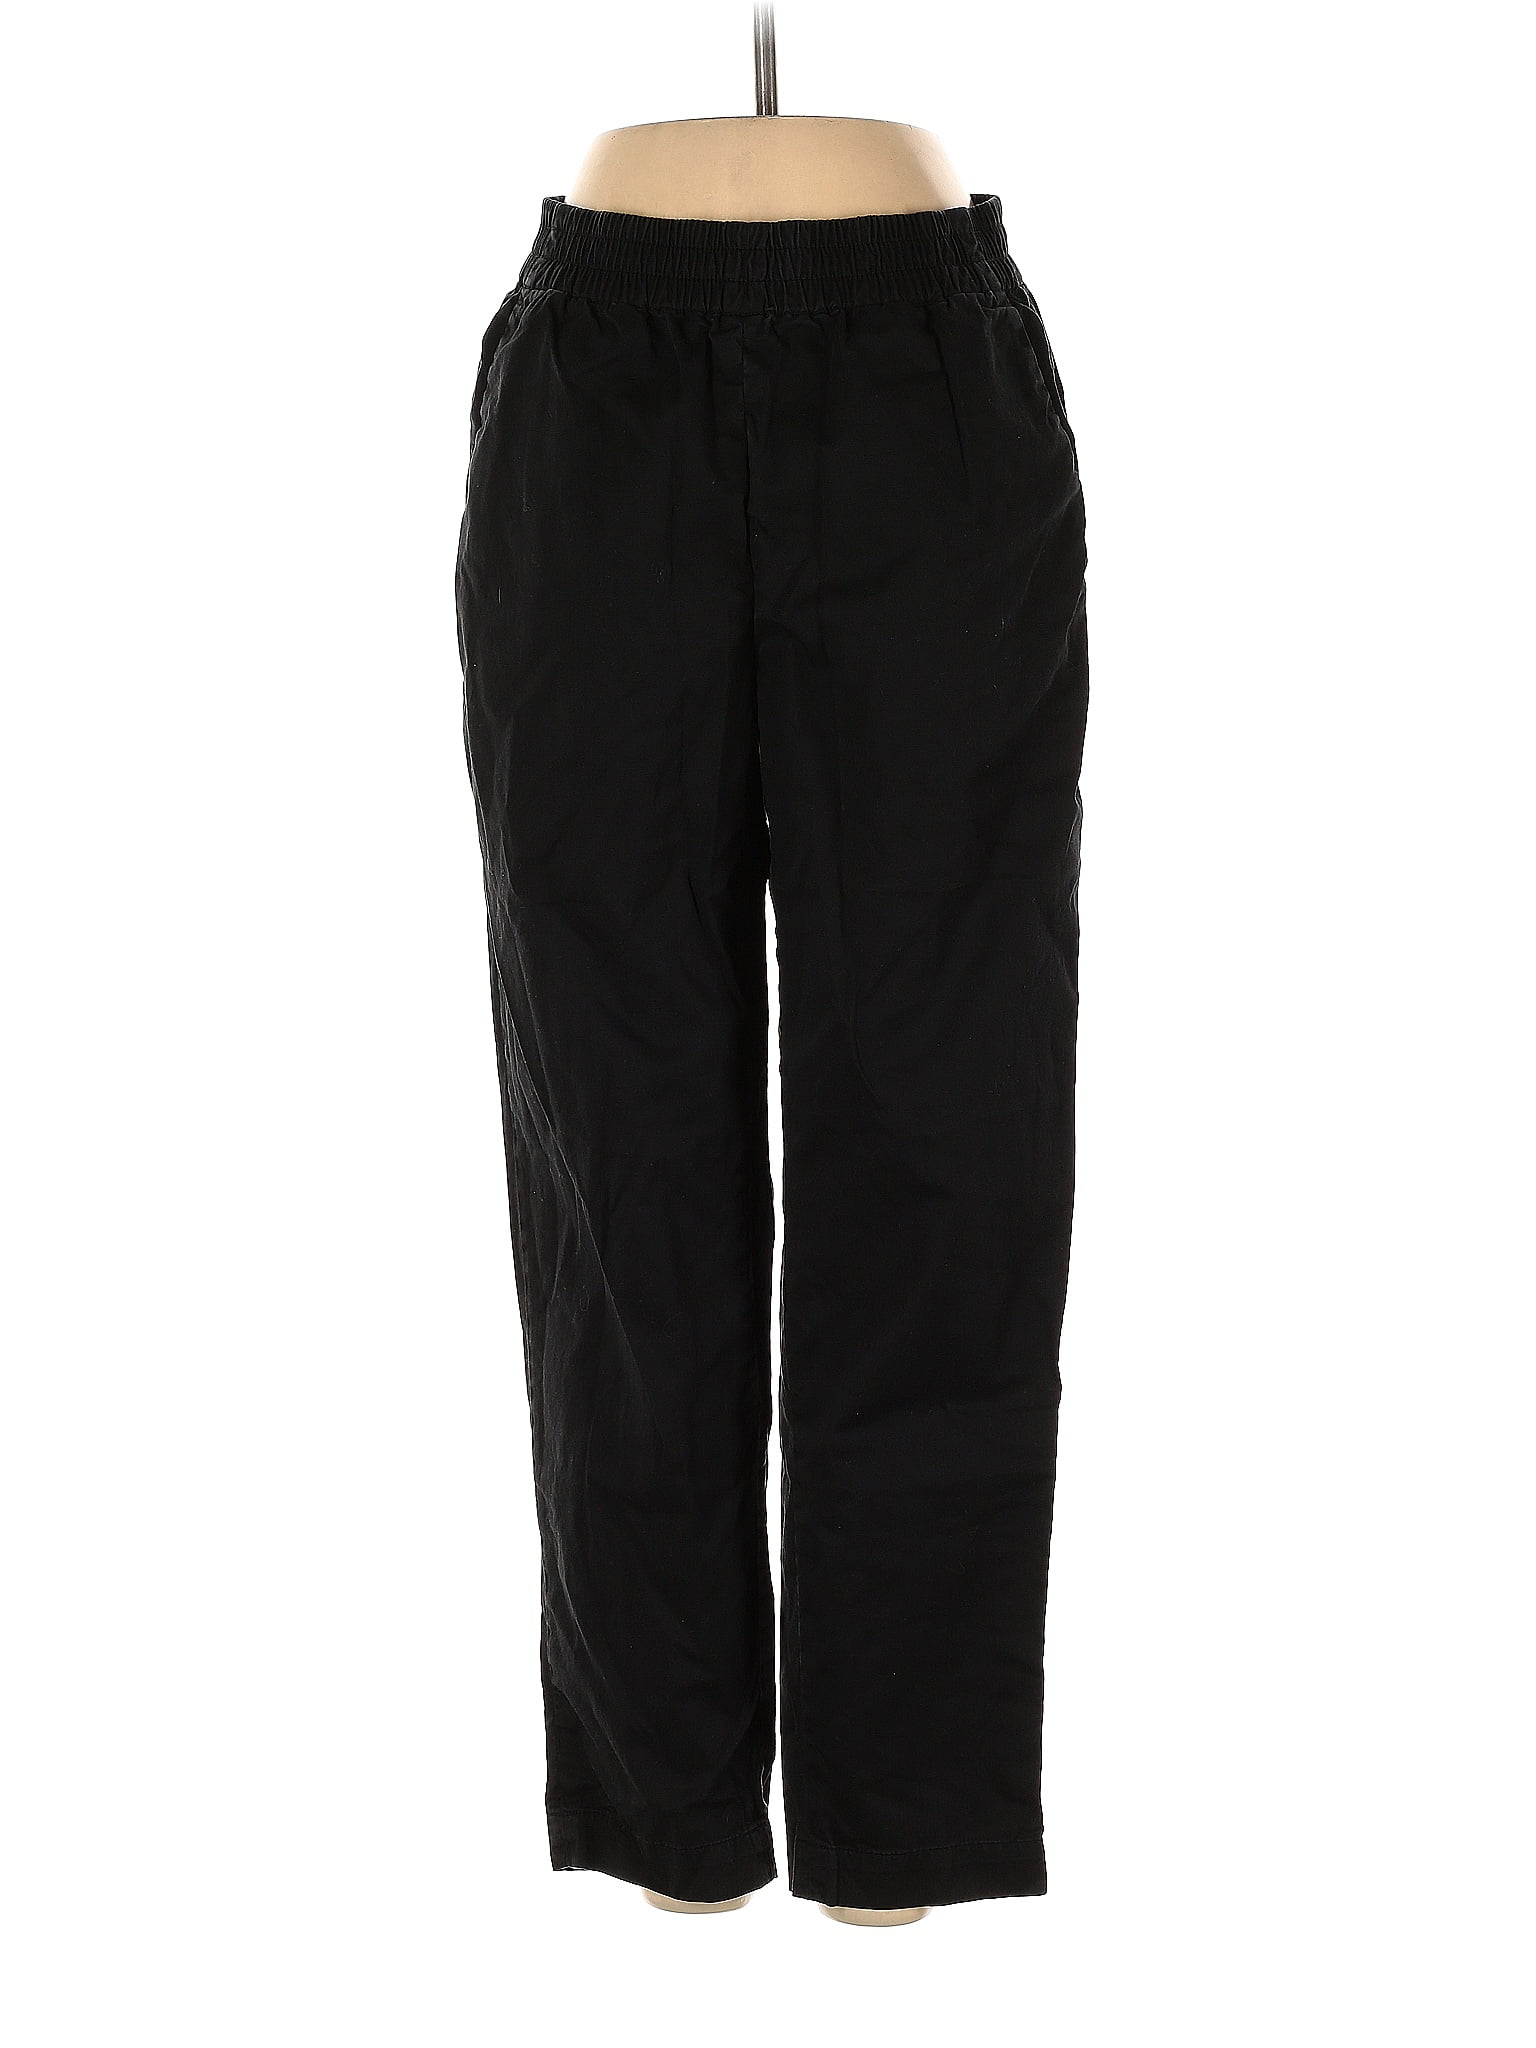 Everlane Solid Black Casual Pants Size 0 - 54% off | ThredUp